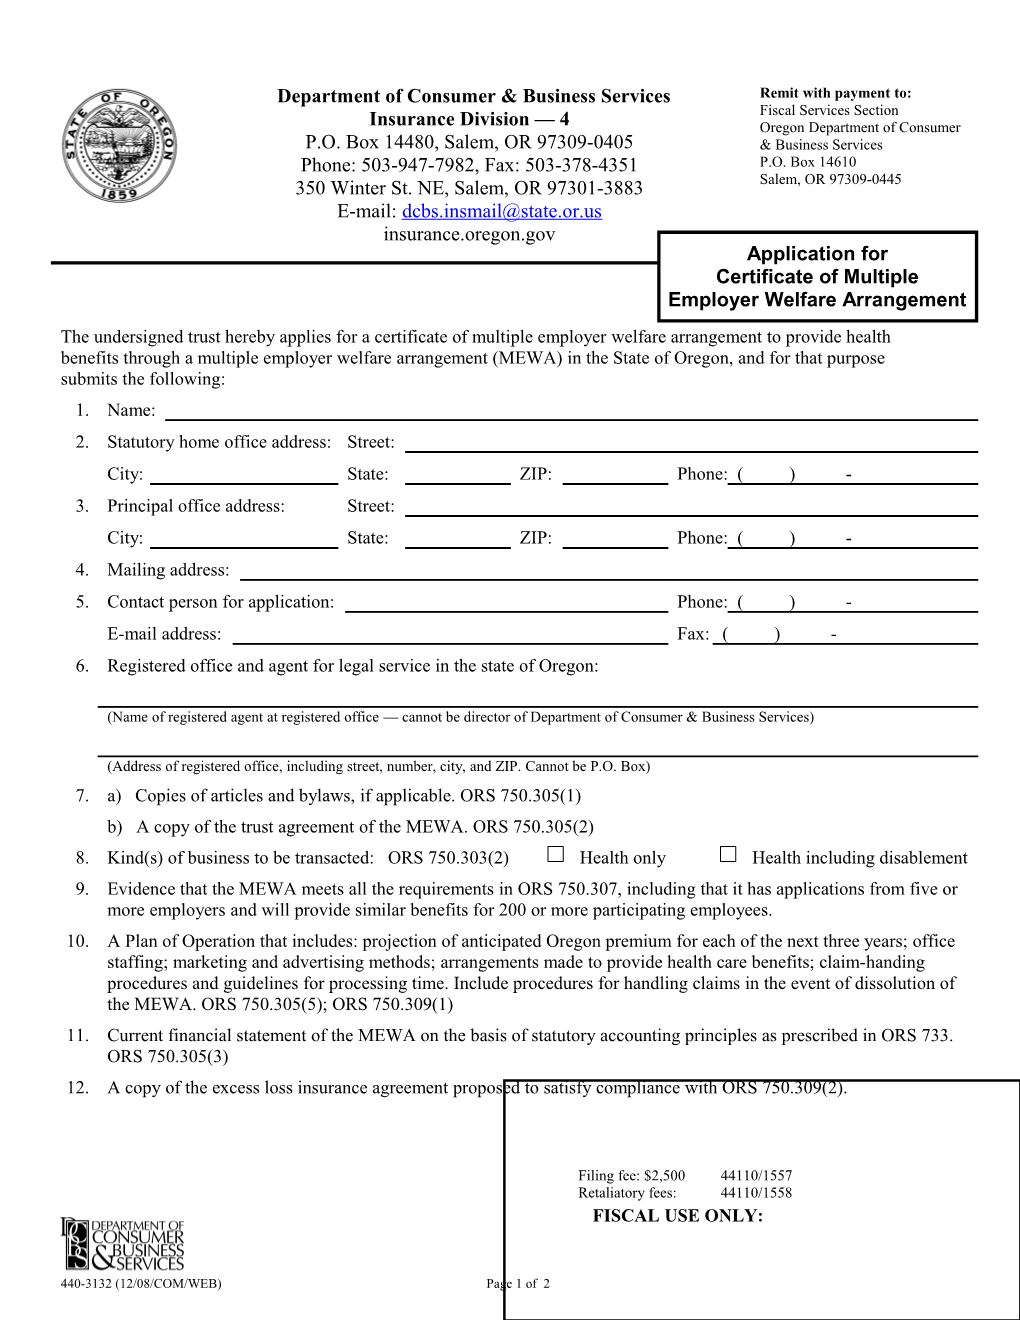 Certificate of Multiple Employer Welfare Arrangement Application